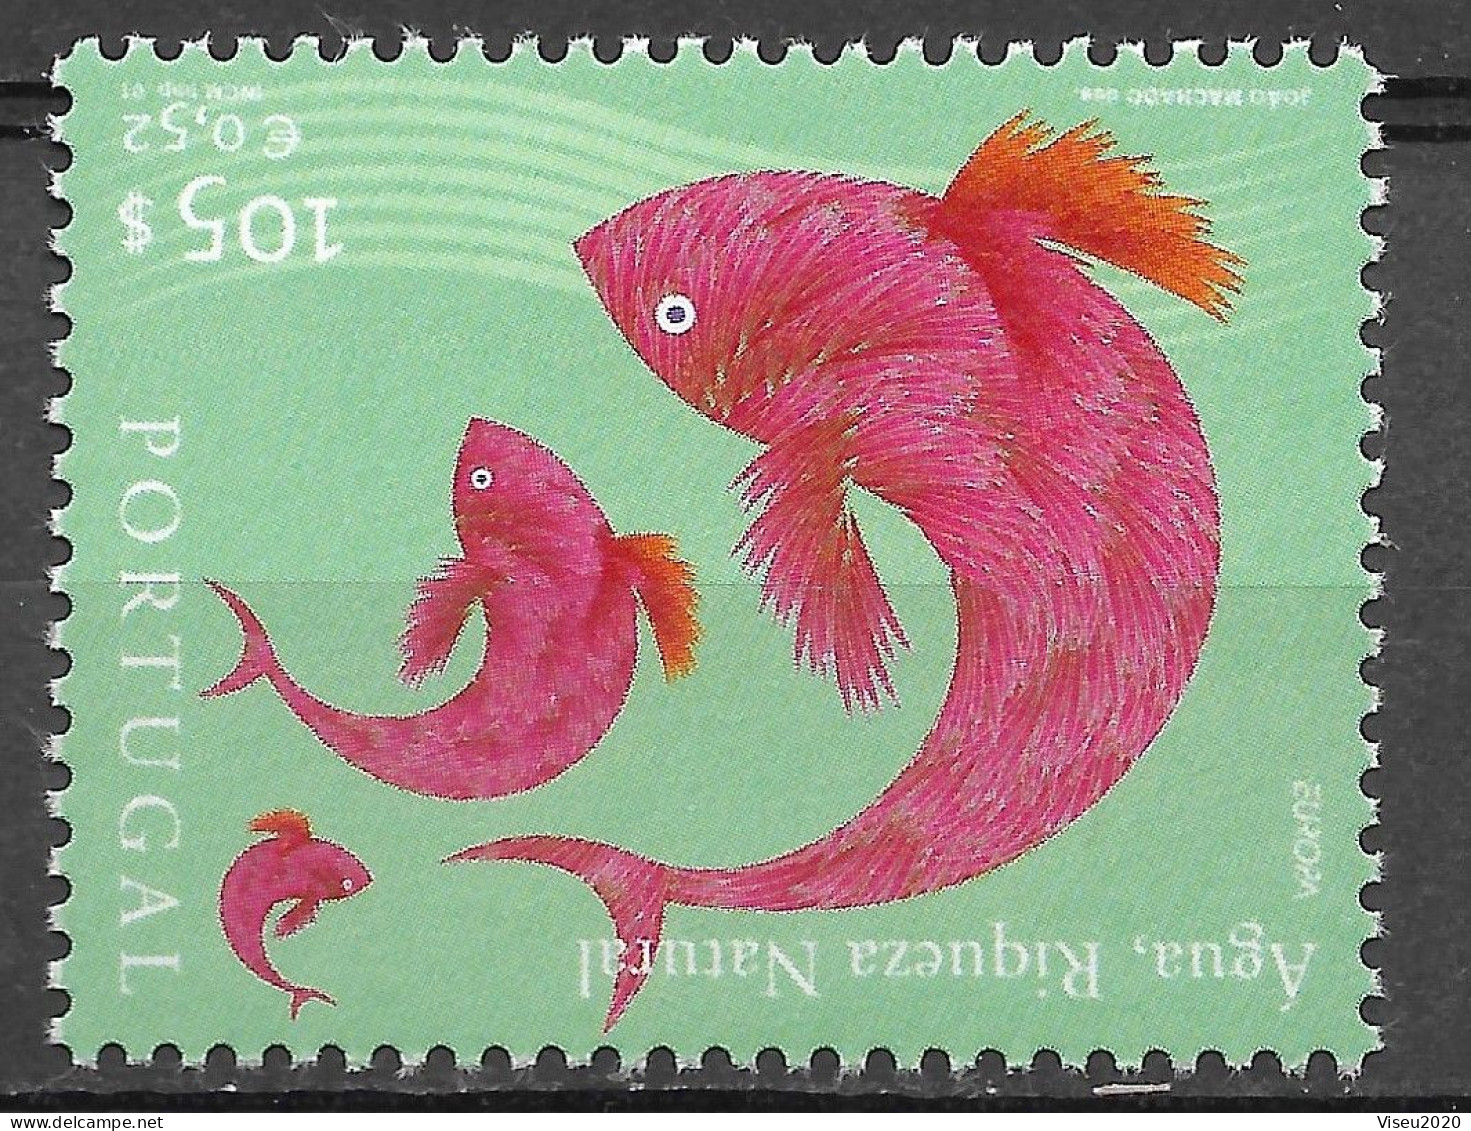 Portugal 2001 Afinsa 2771 Europoa CEPT - Water Treasure Of Nature MNH - Unused Stamps